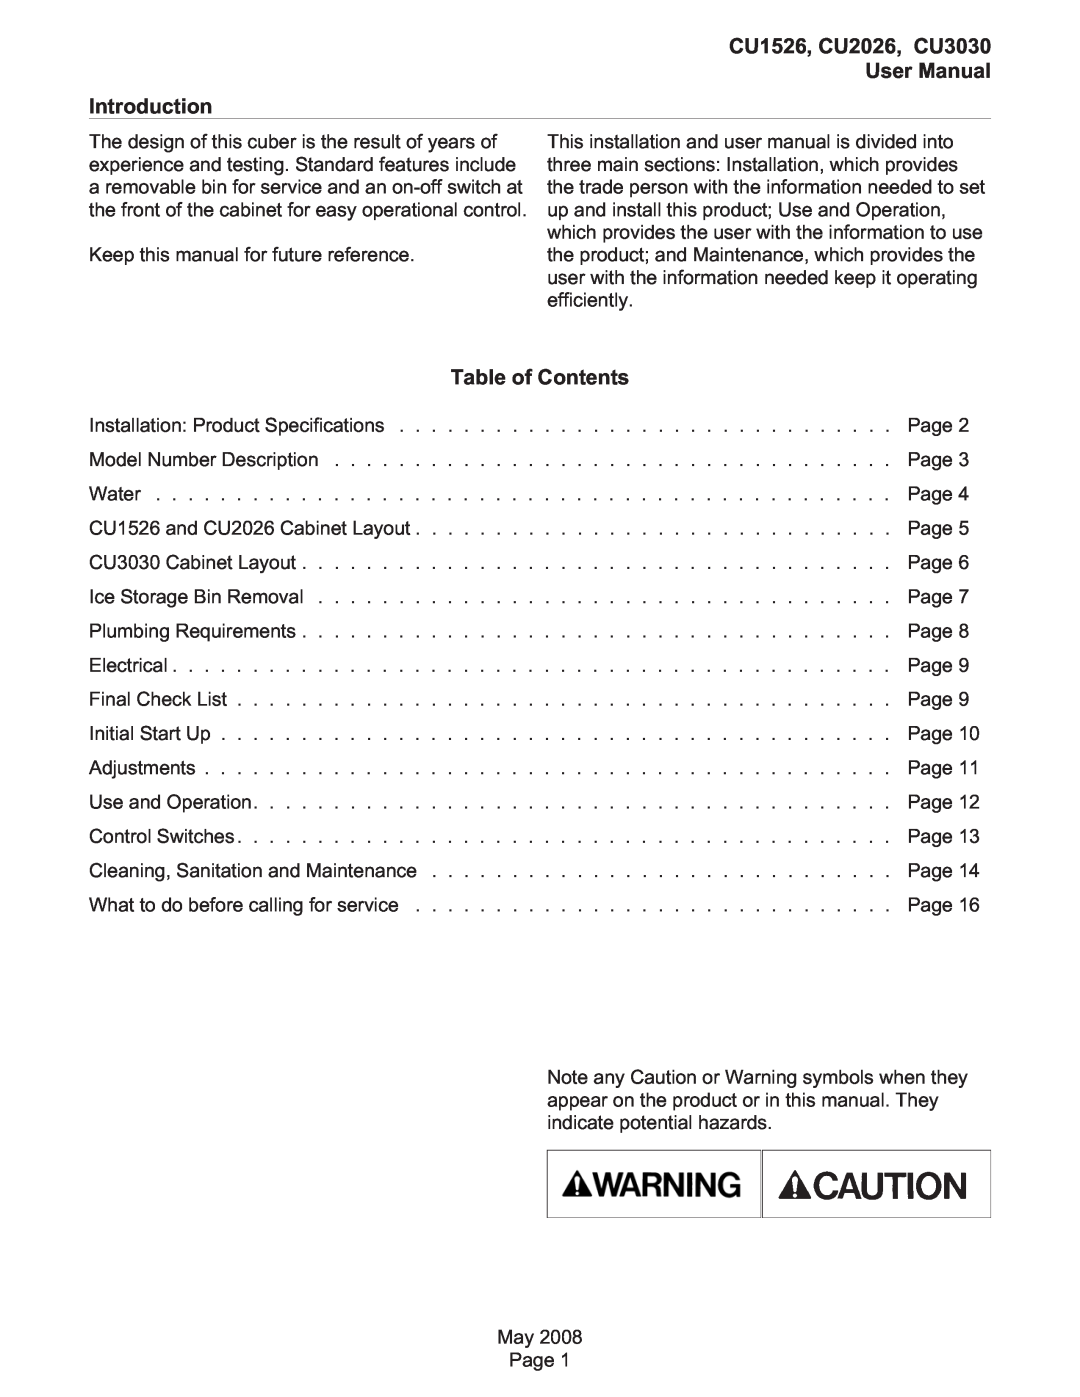 Scotsman Ice CU1526, CU2026 user manual Table of Contents 